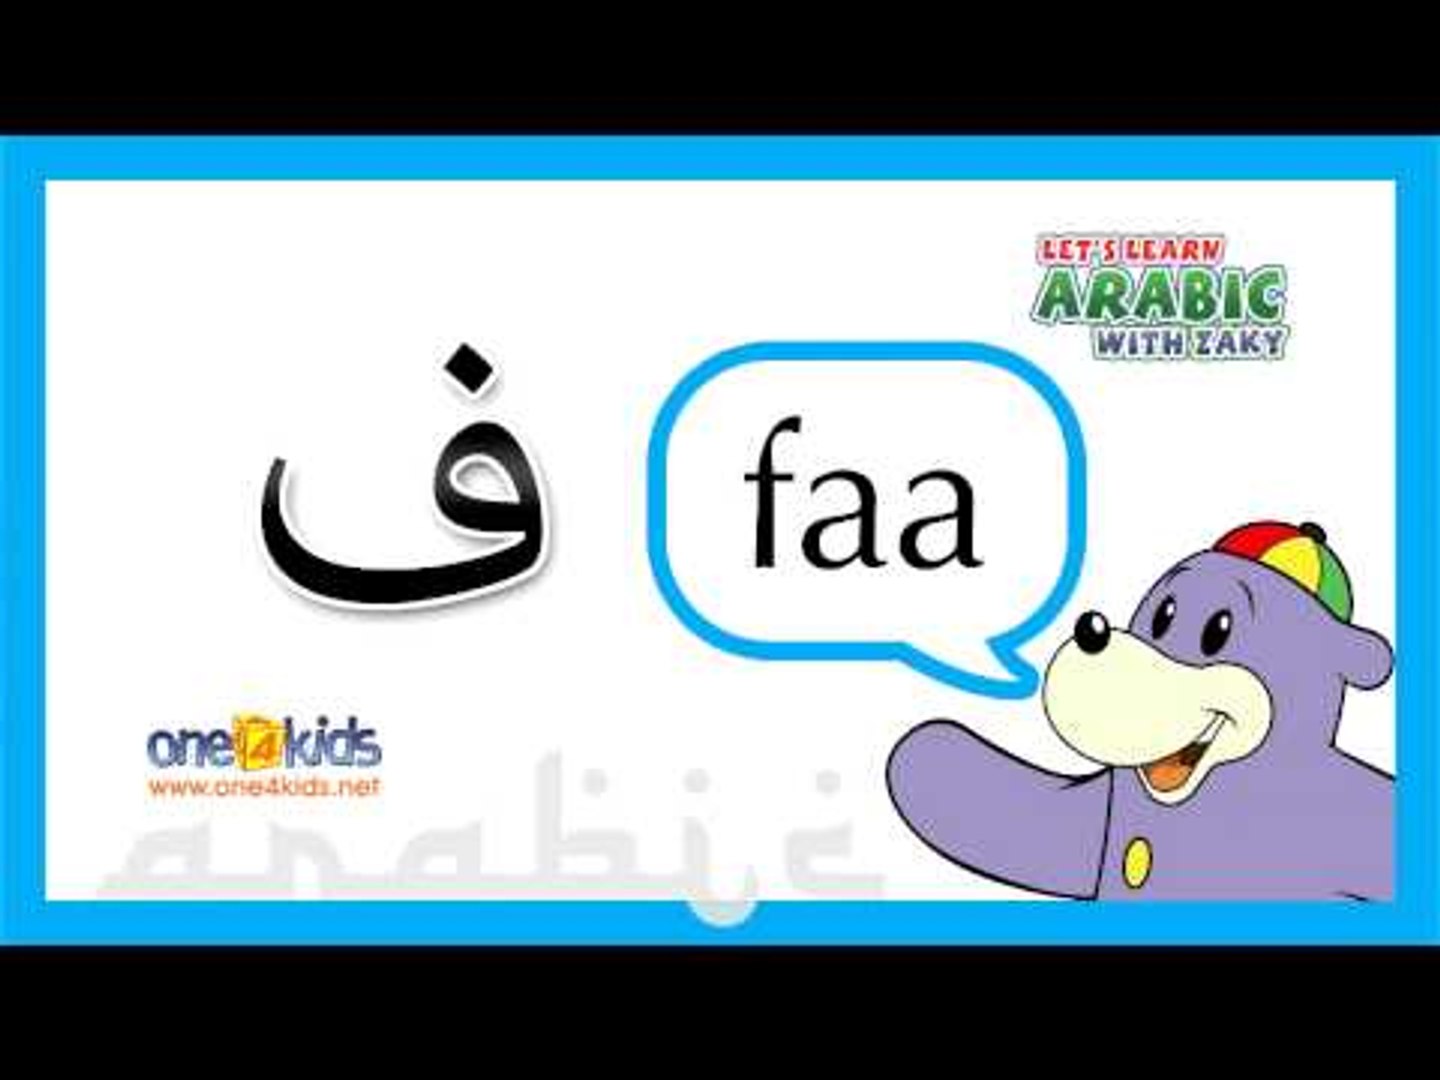 Learn Arabic with Zaky by One 4 Kids - Dailymotion